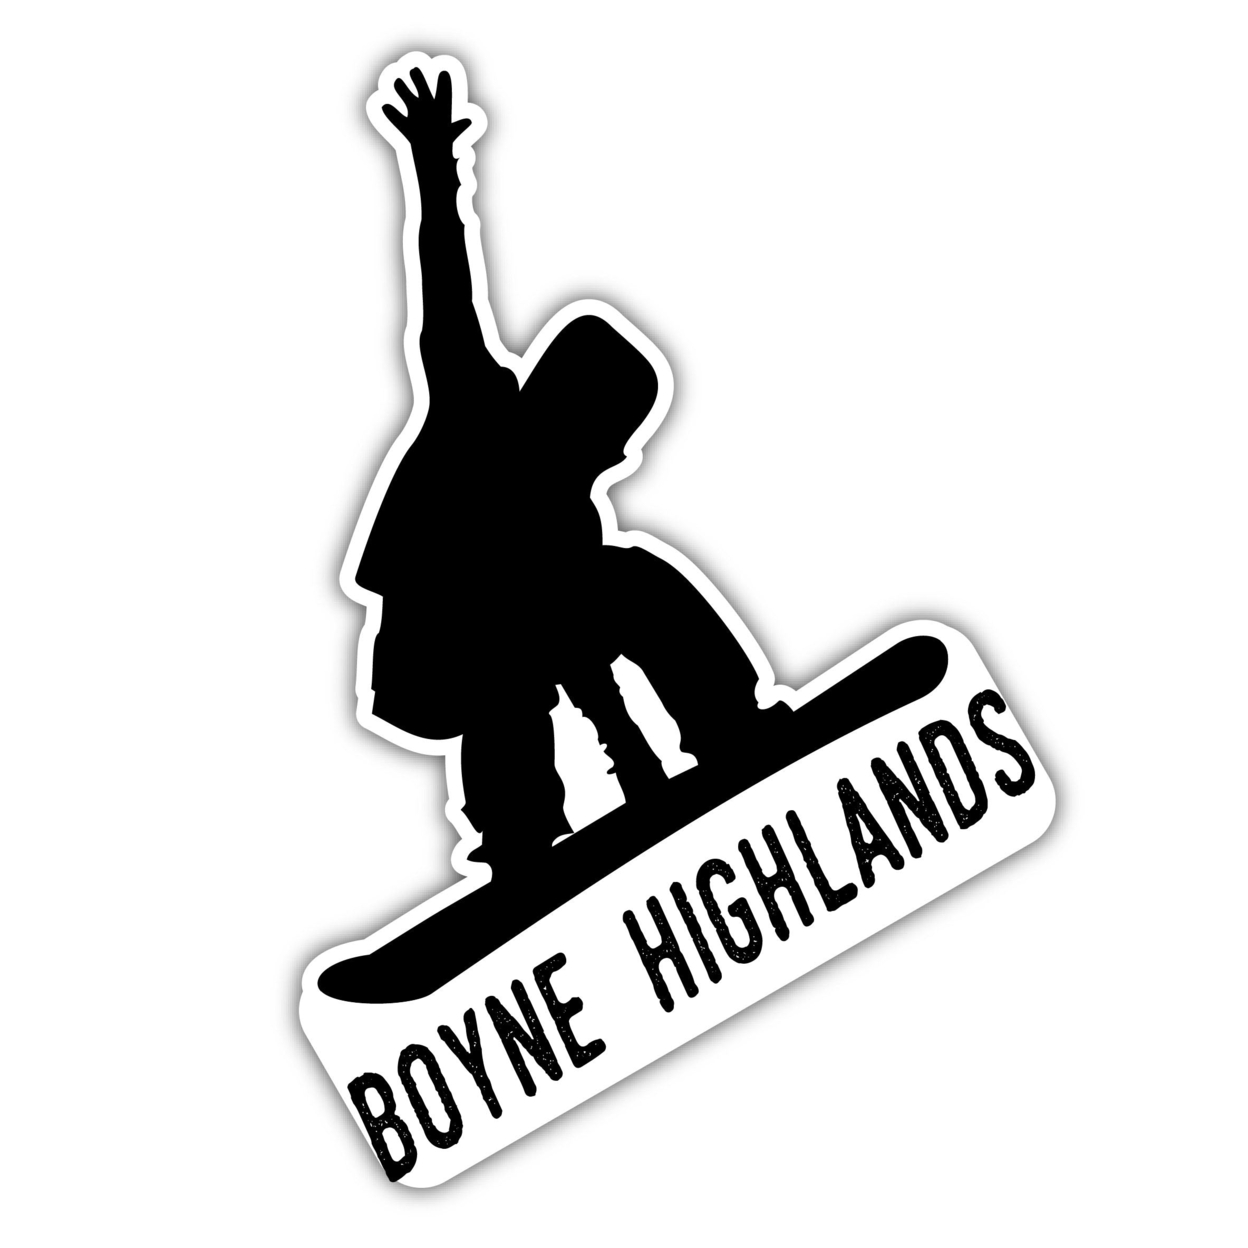 Boyne Highlands Michigan Ski Adventures Souvenir Approximately 5 X 2.5-Inch Vinyl Decal Sticker Goggle Design